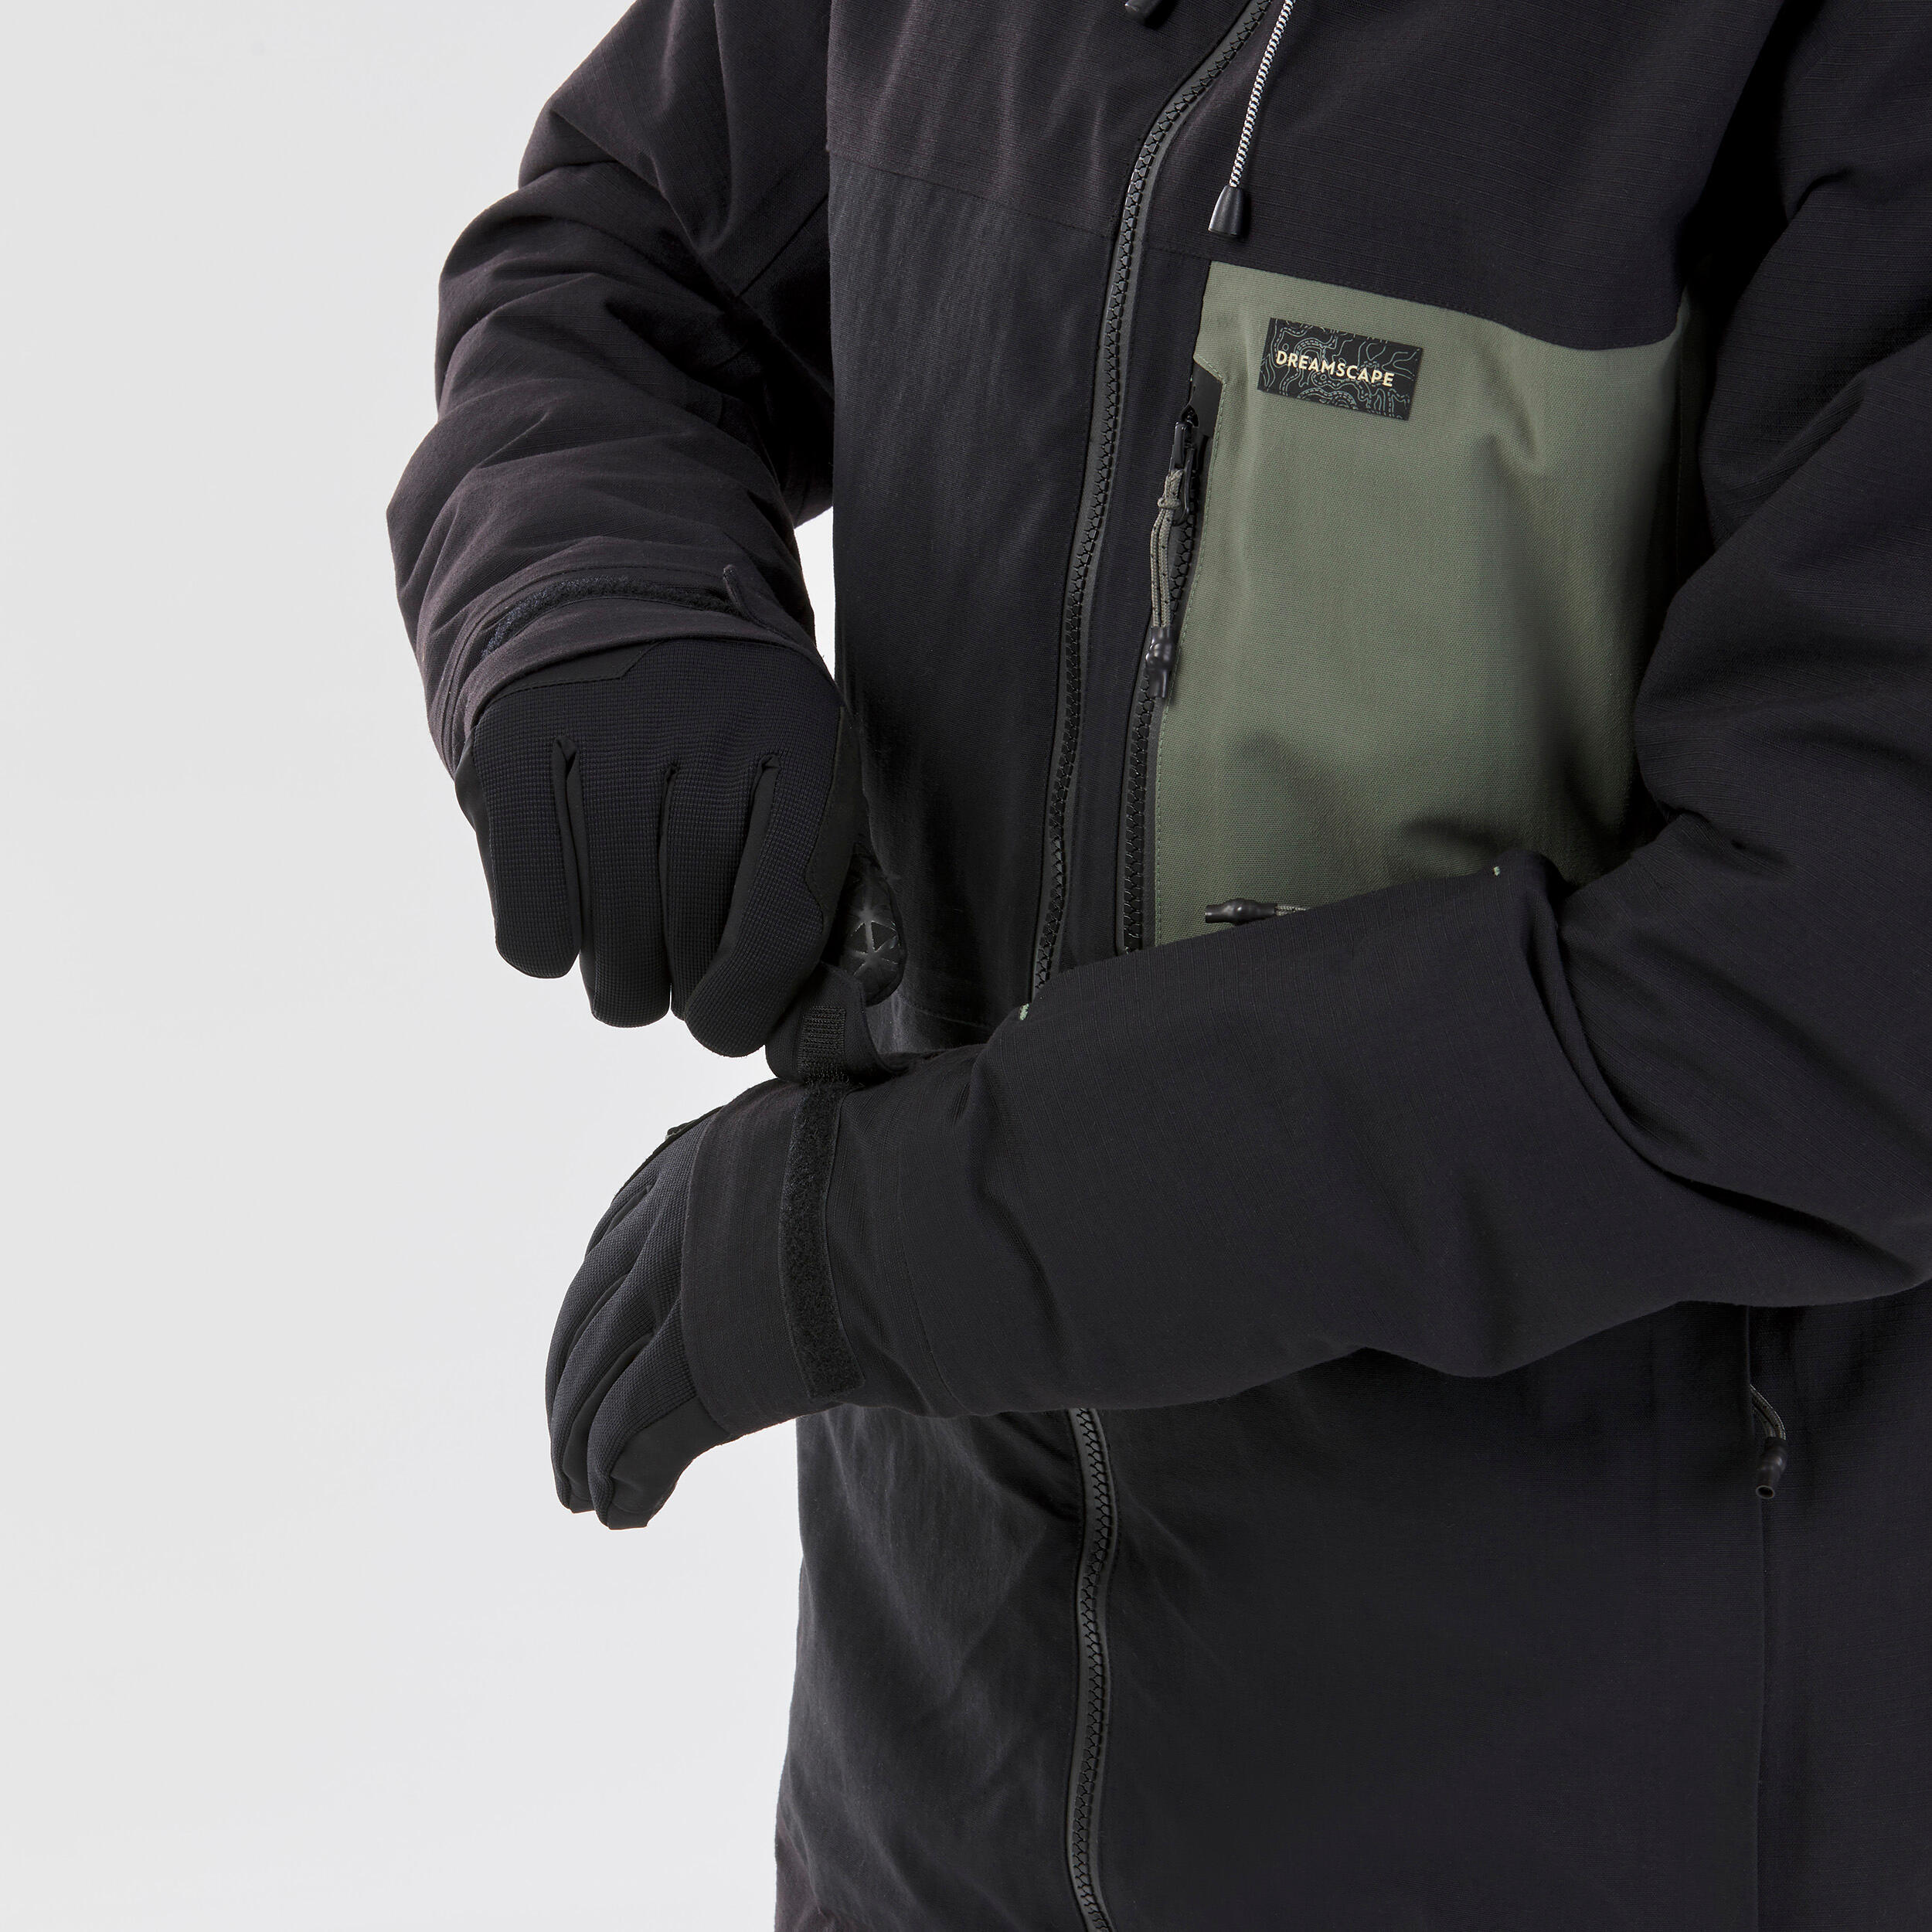 Men's snowboard jacket compatible with ZIPROTEC - SNB 500 - Black 10/18